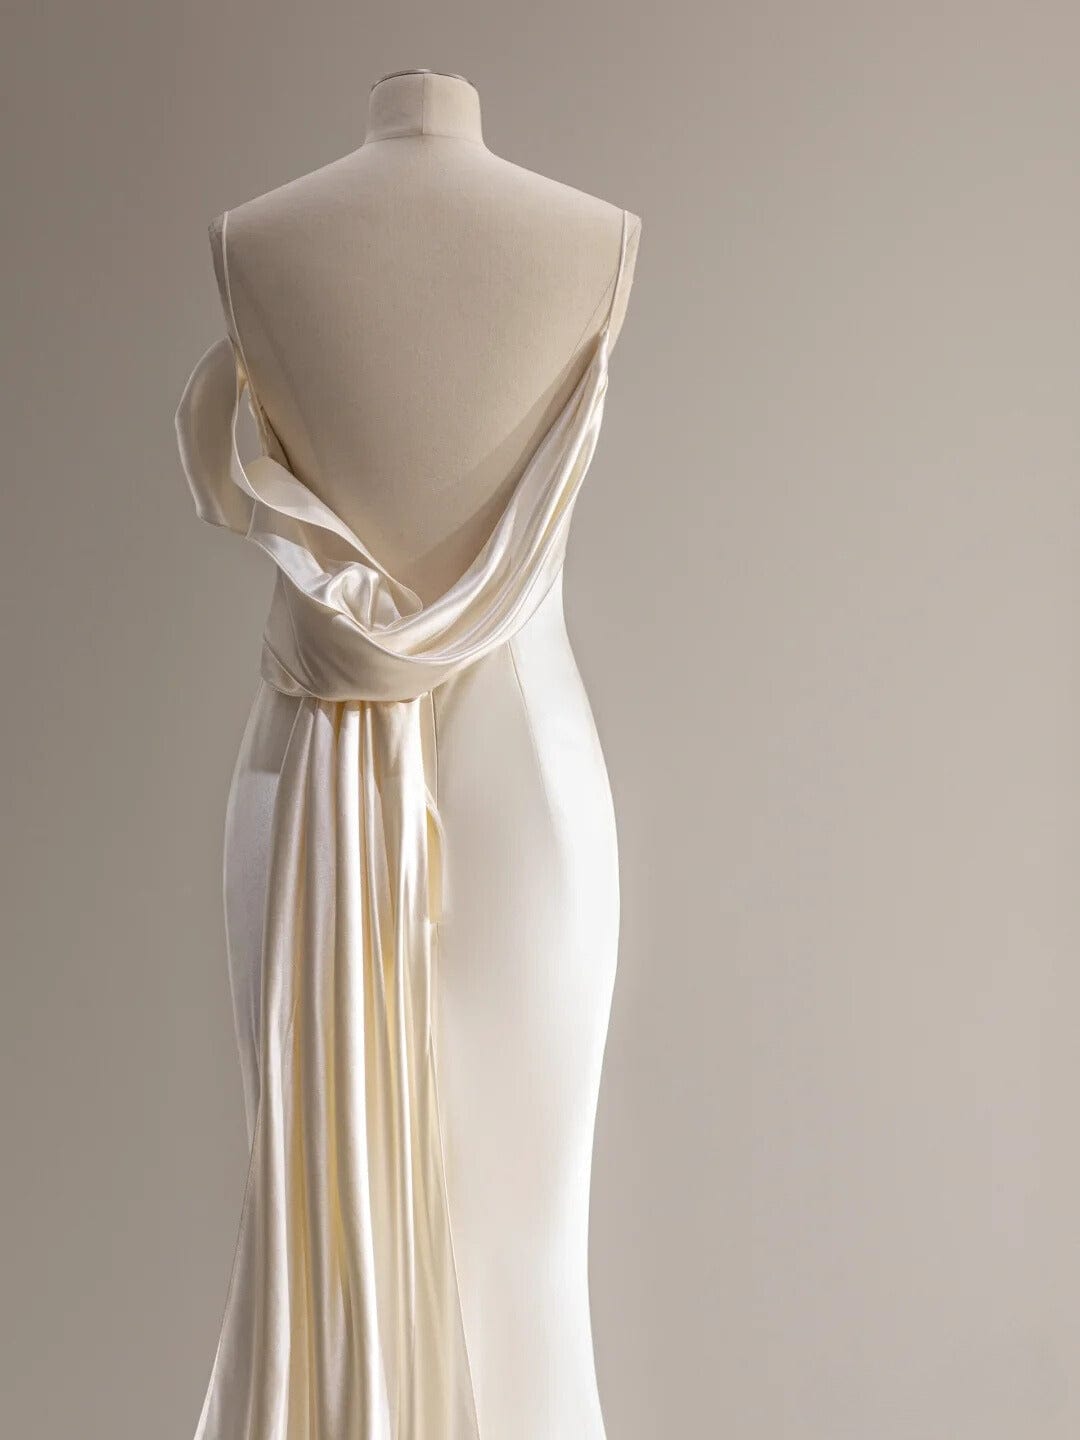 Custom silk wedding dress with stunning draped cowl back